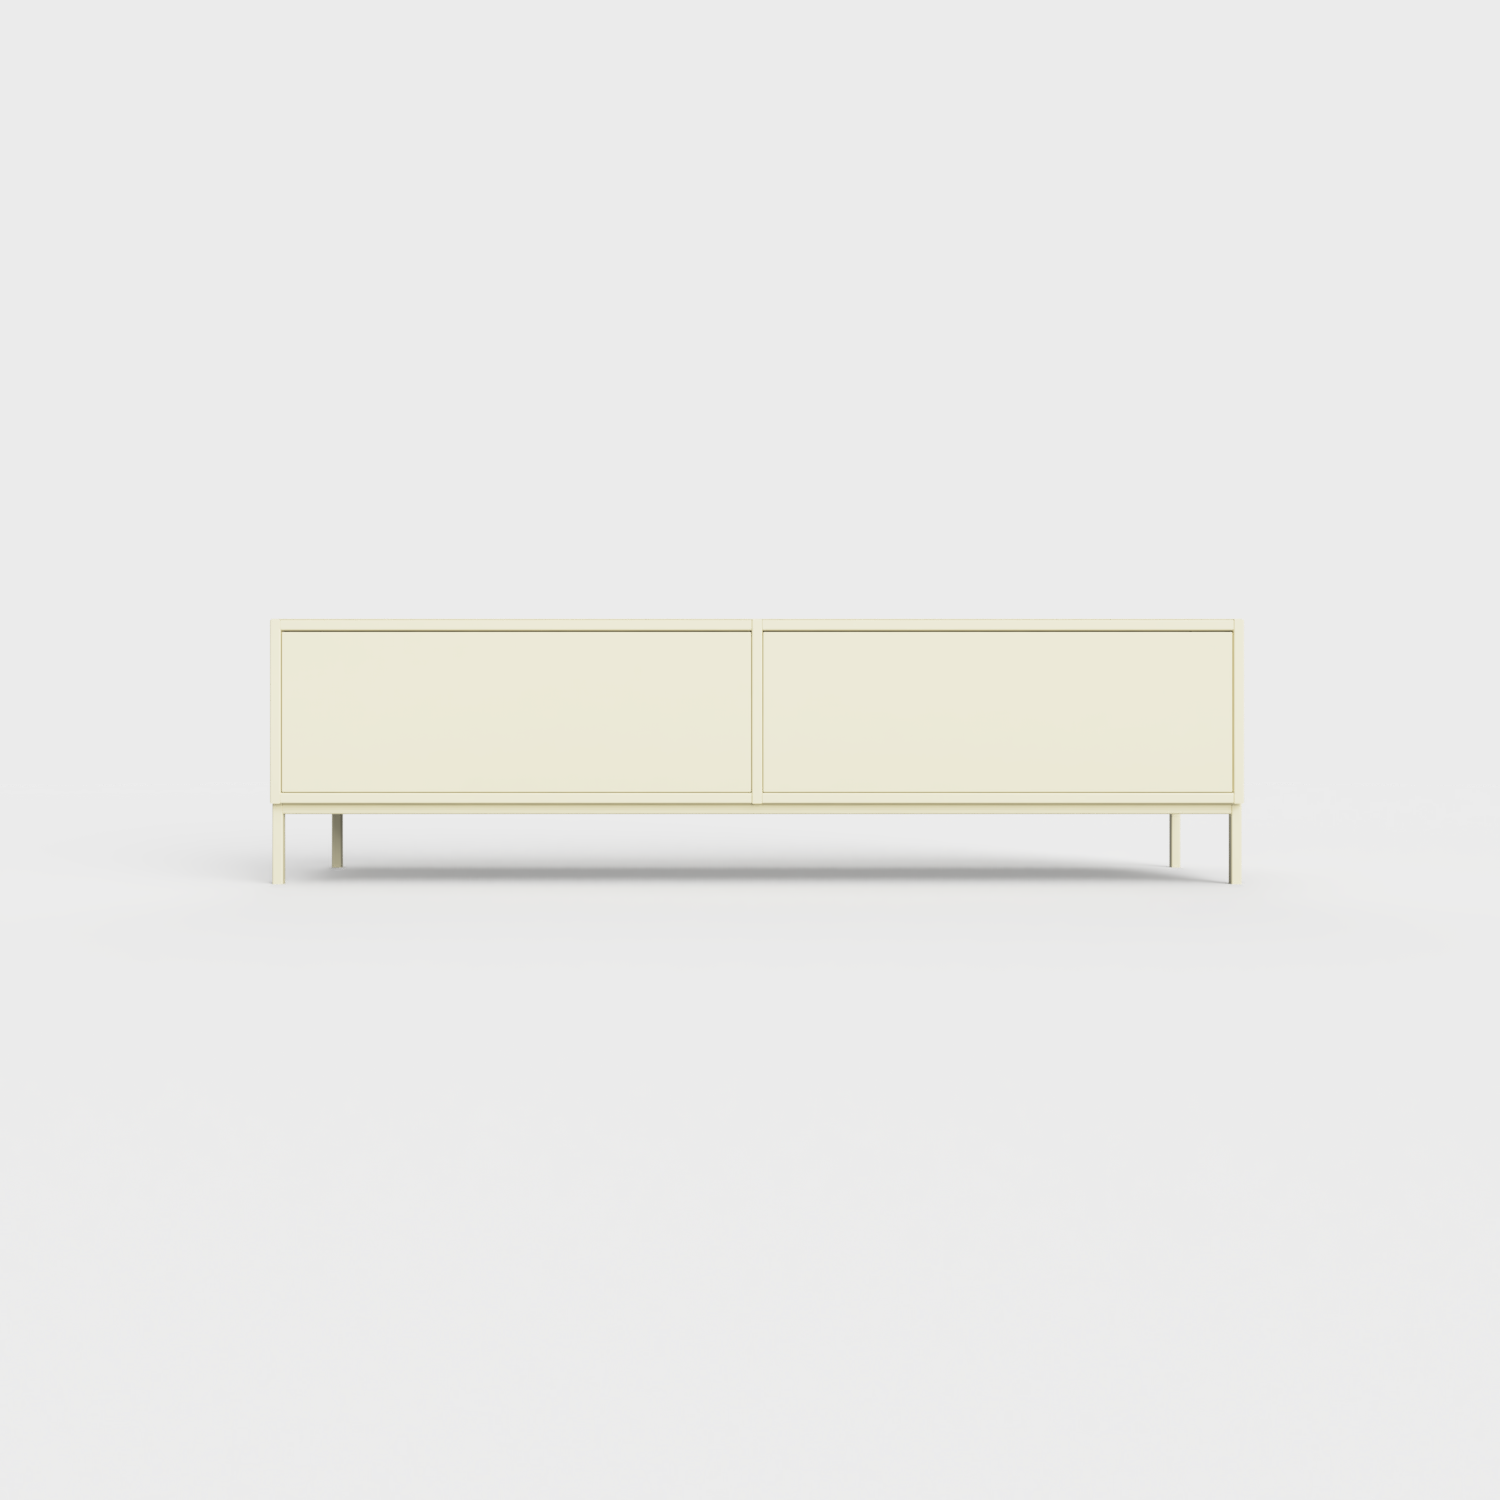 Prunus 01 Lowboard in Light Ecru color, powder-coated steel, elegant and modern piece of furniture for your living room